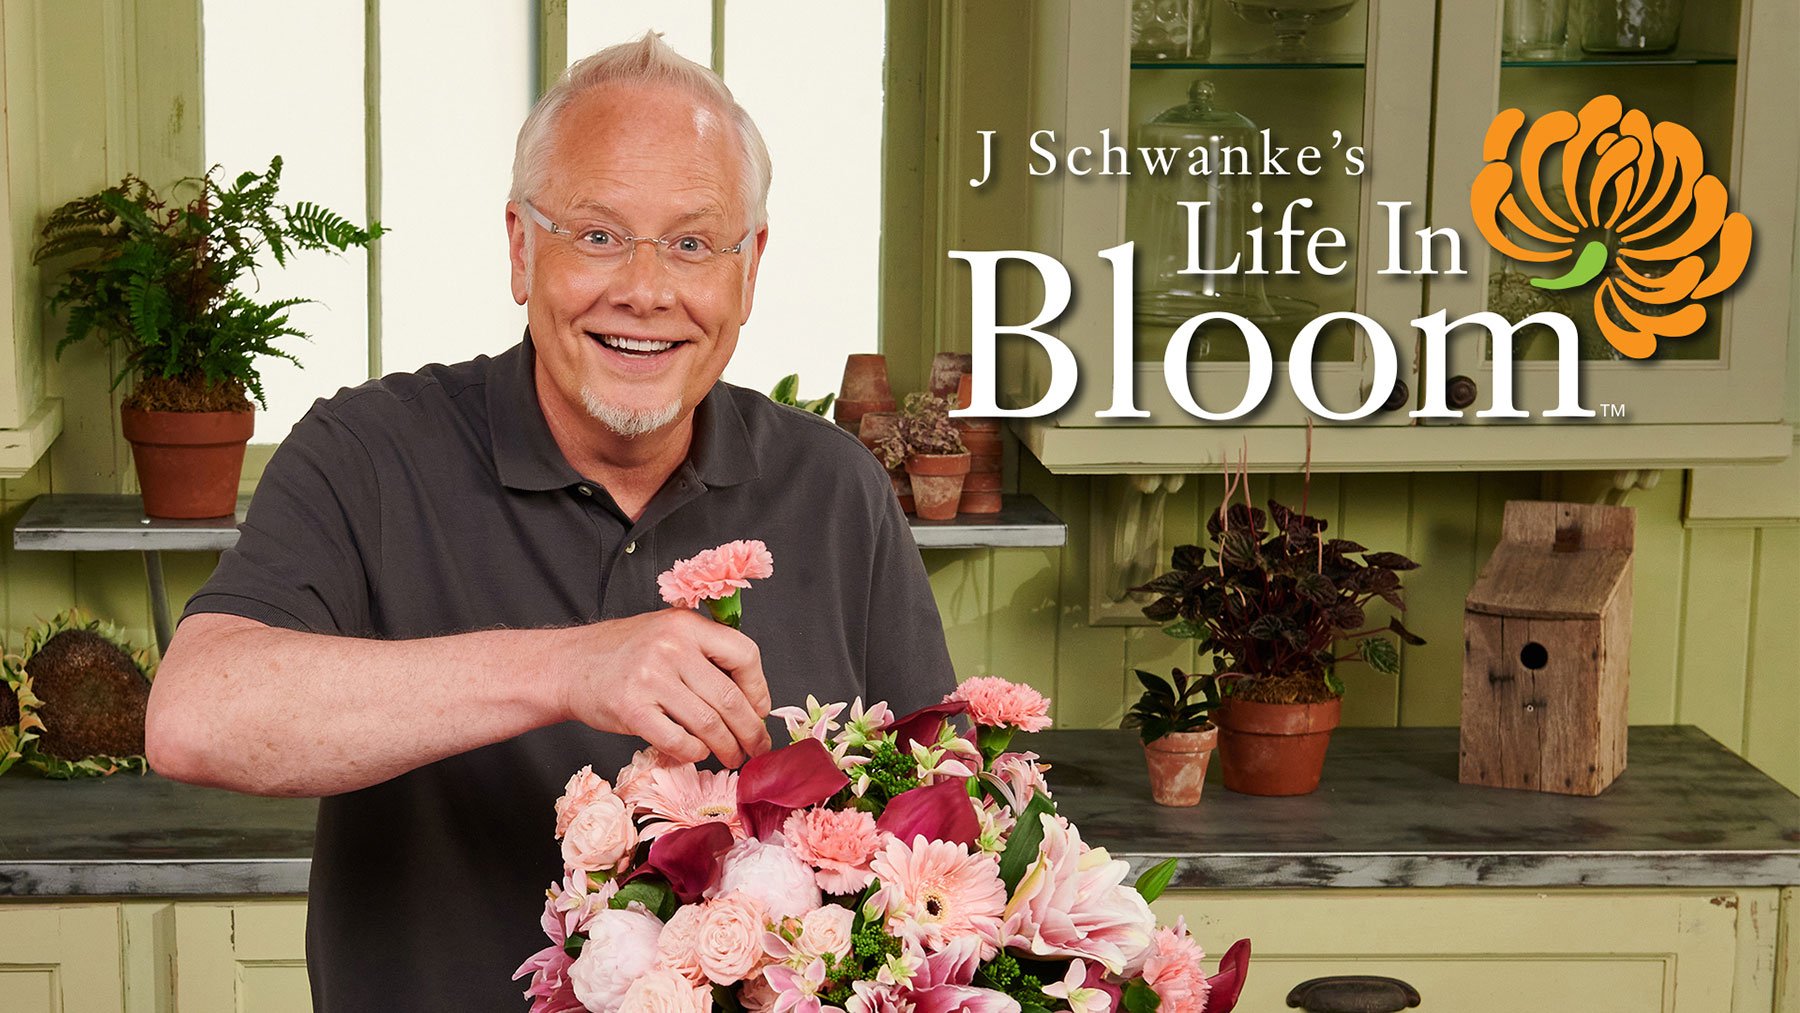 Season 4 of J Schwanke's Life in Bloom- airs starting in April 2022